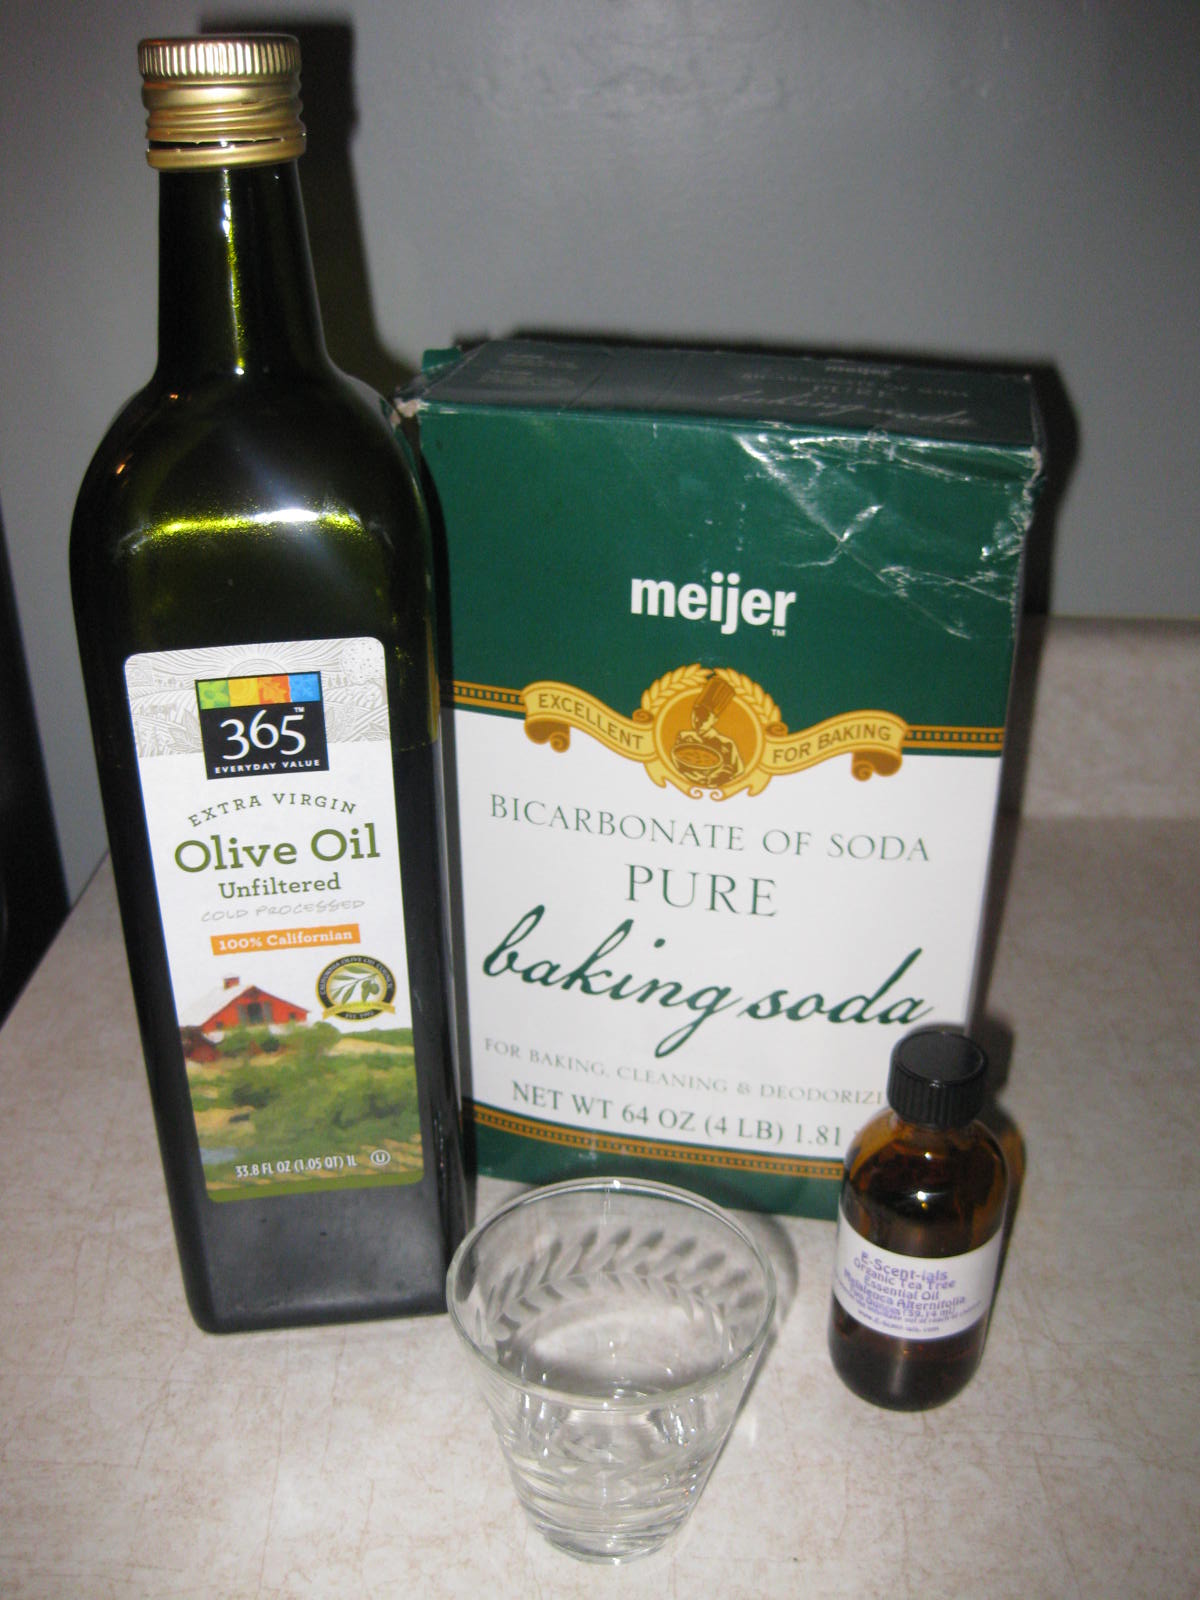 Olive oil, baking soda & Tea tree